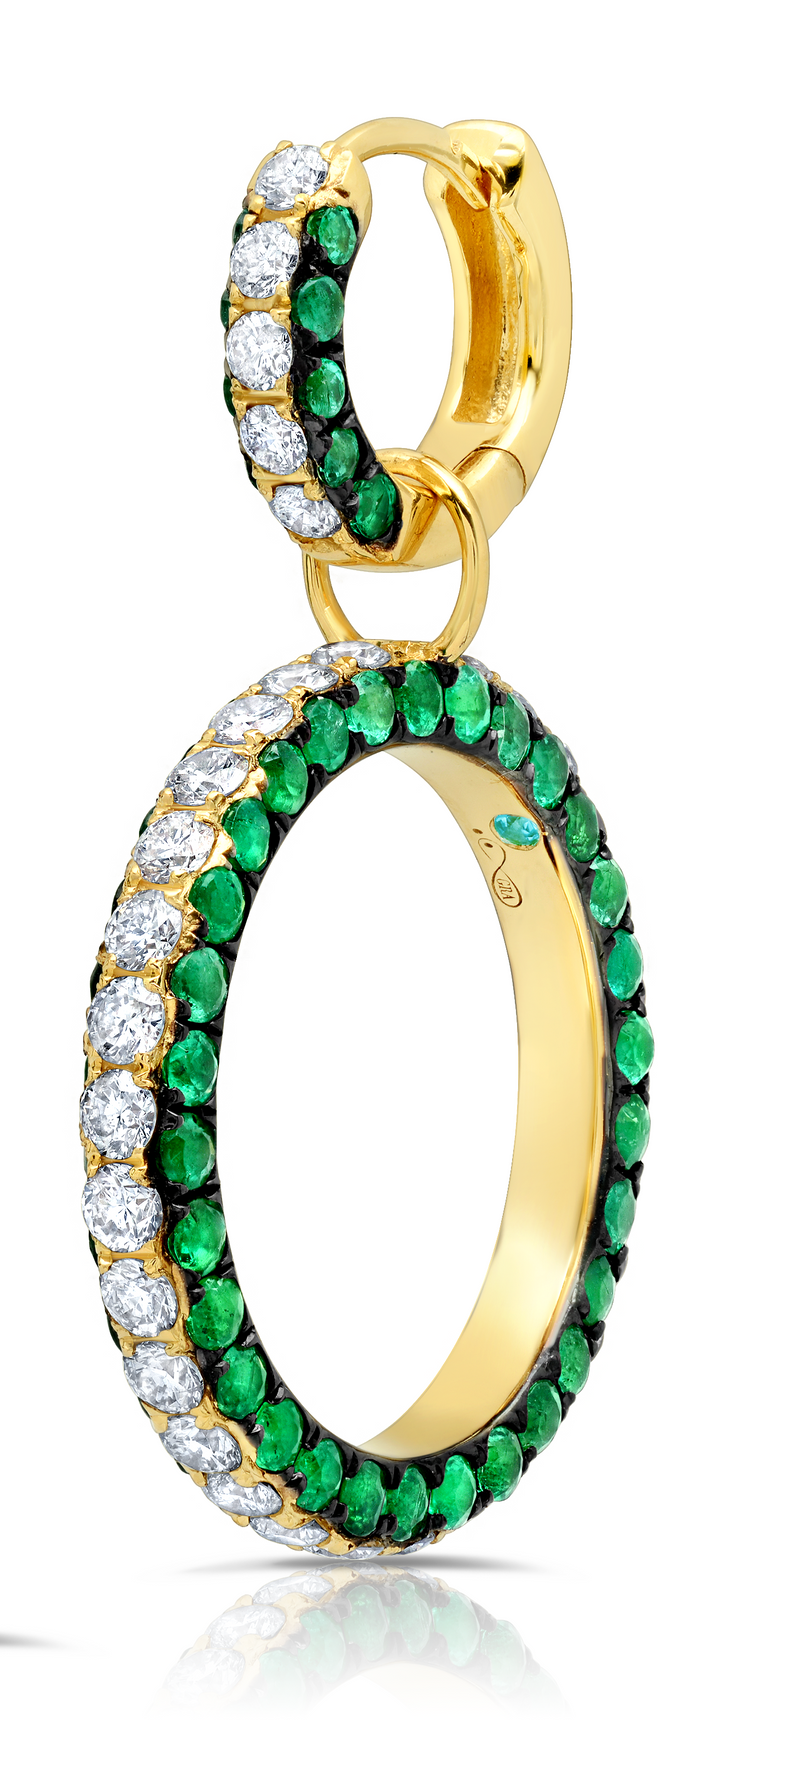 Couture Emerald and Diamond earrings in 18 karat gold by award winning fine jewelry designer Graziela